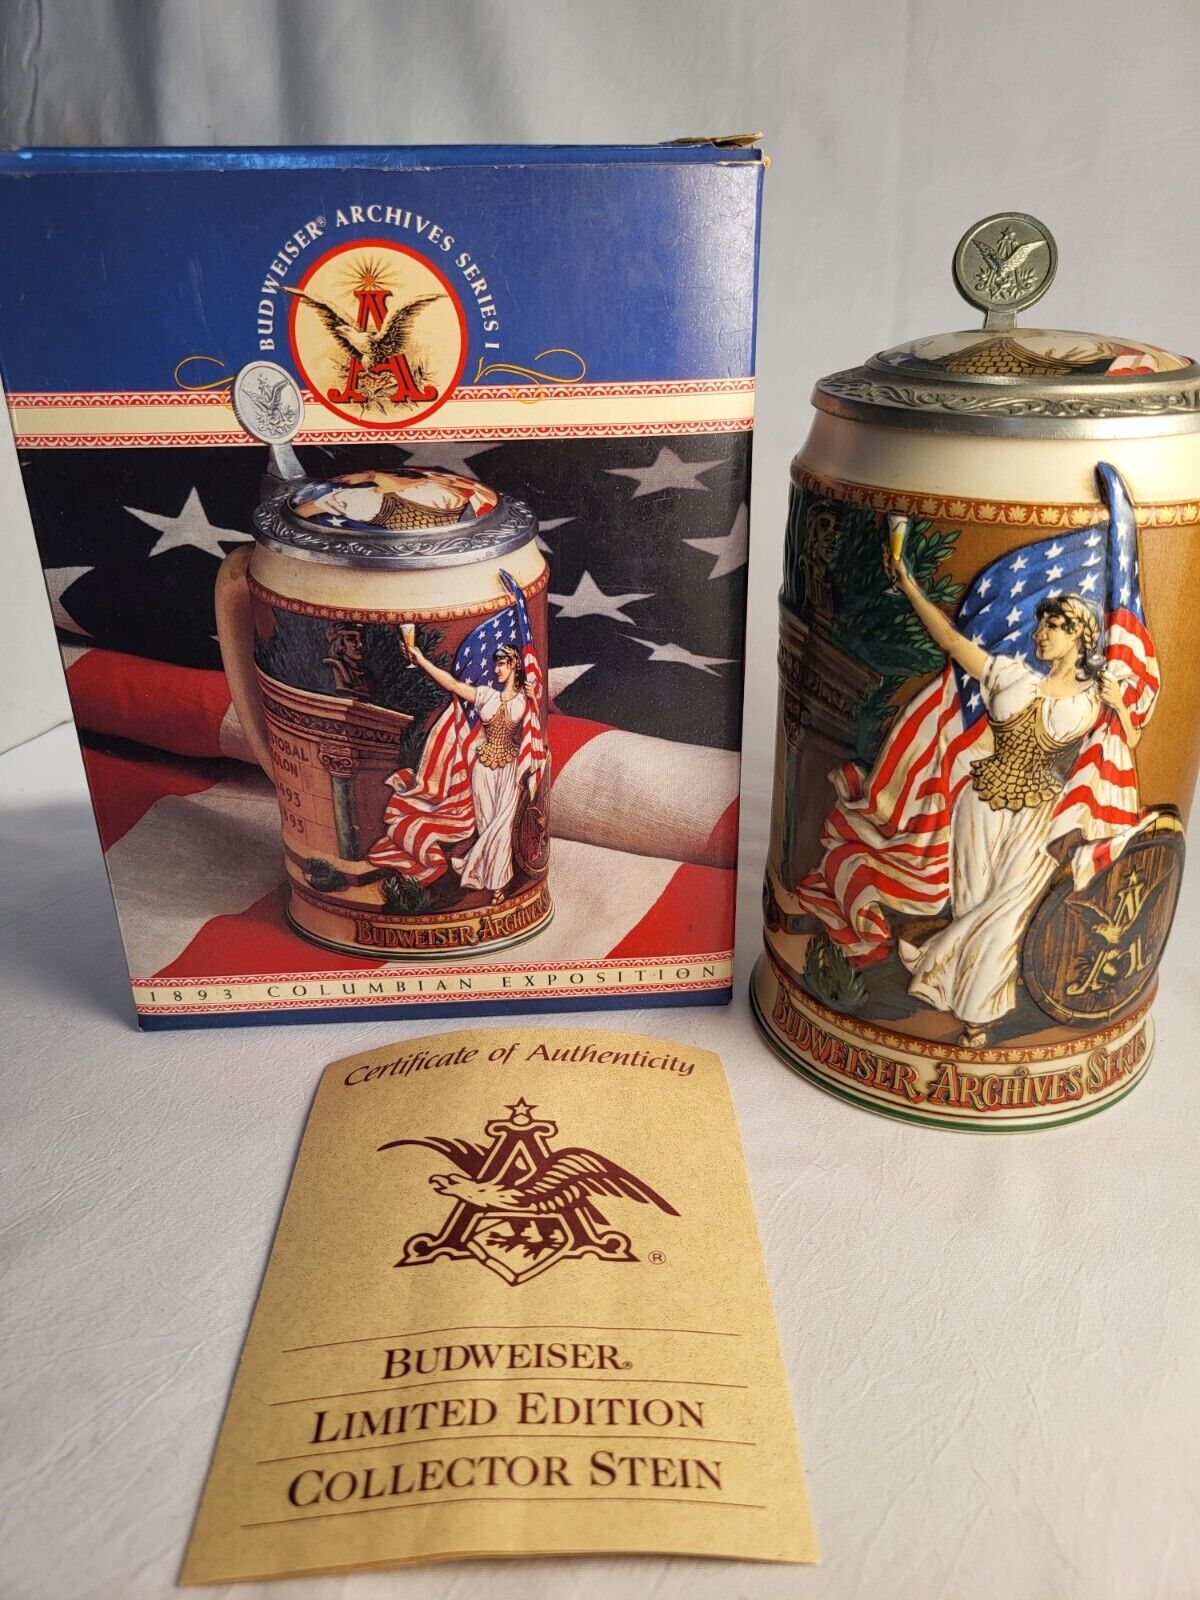 1992 Anheuser Bush Budweiser Archives Series 1893 Columbian Exposition Stein 